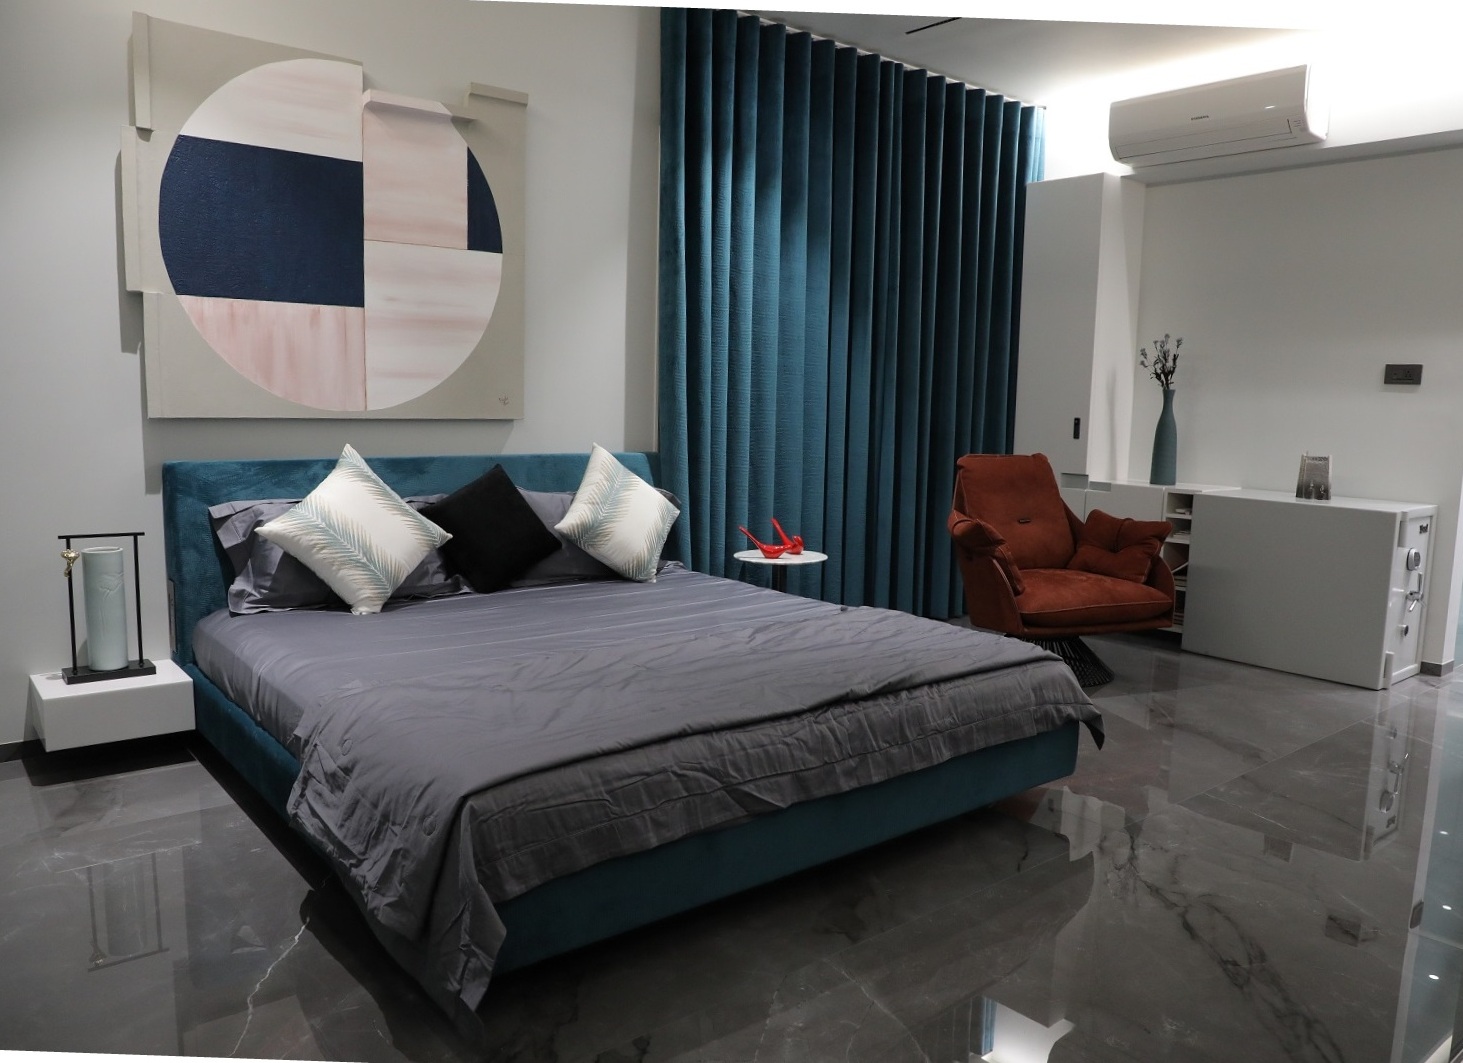 Master bedroom Design with geometrical art theme